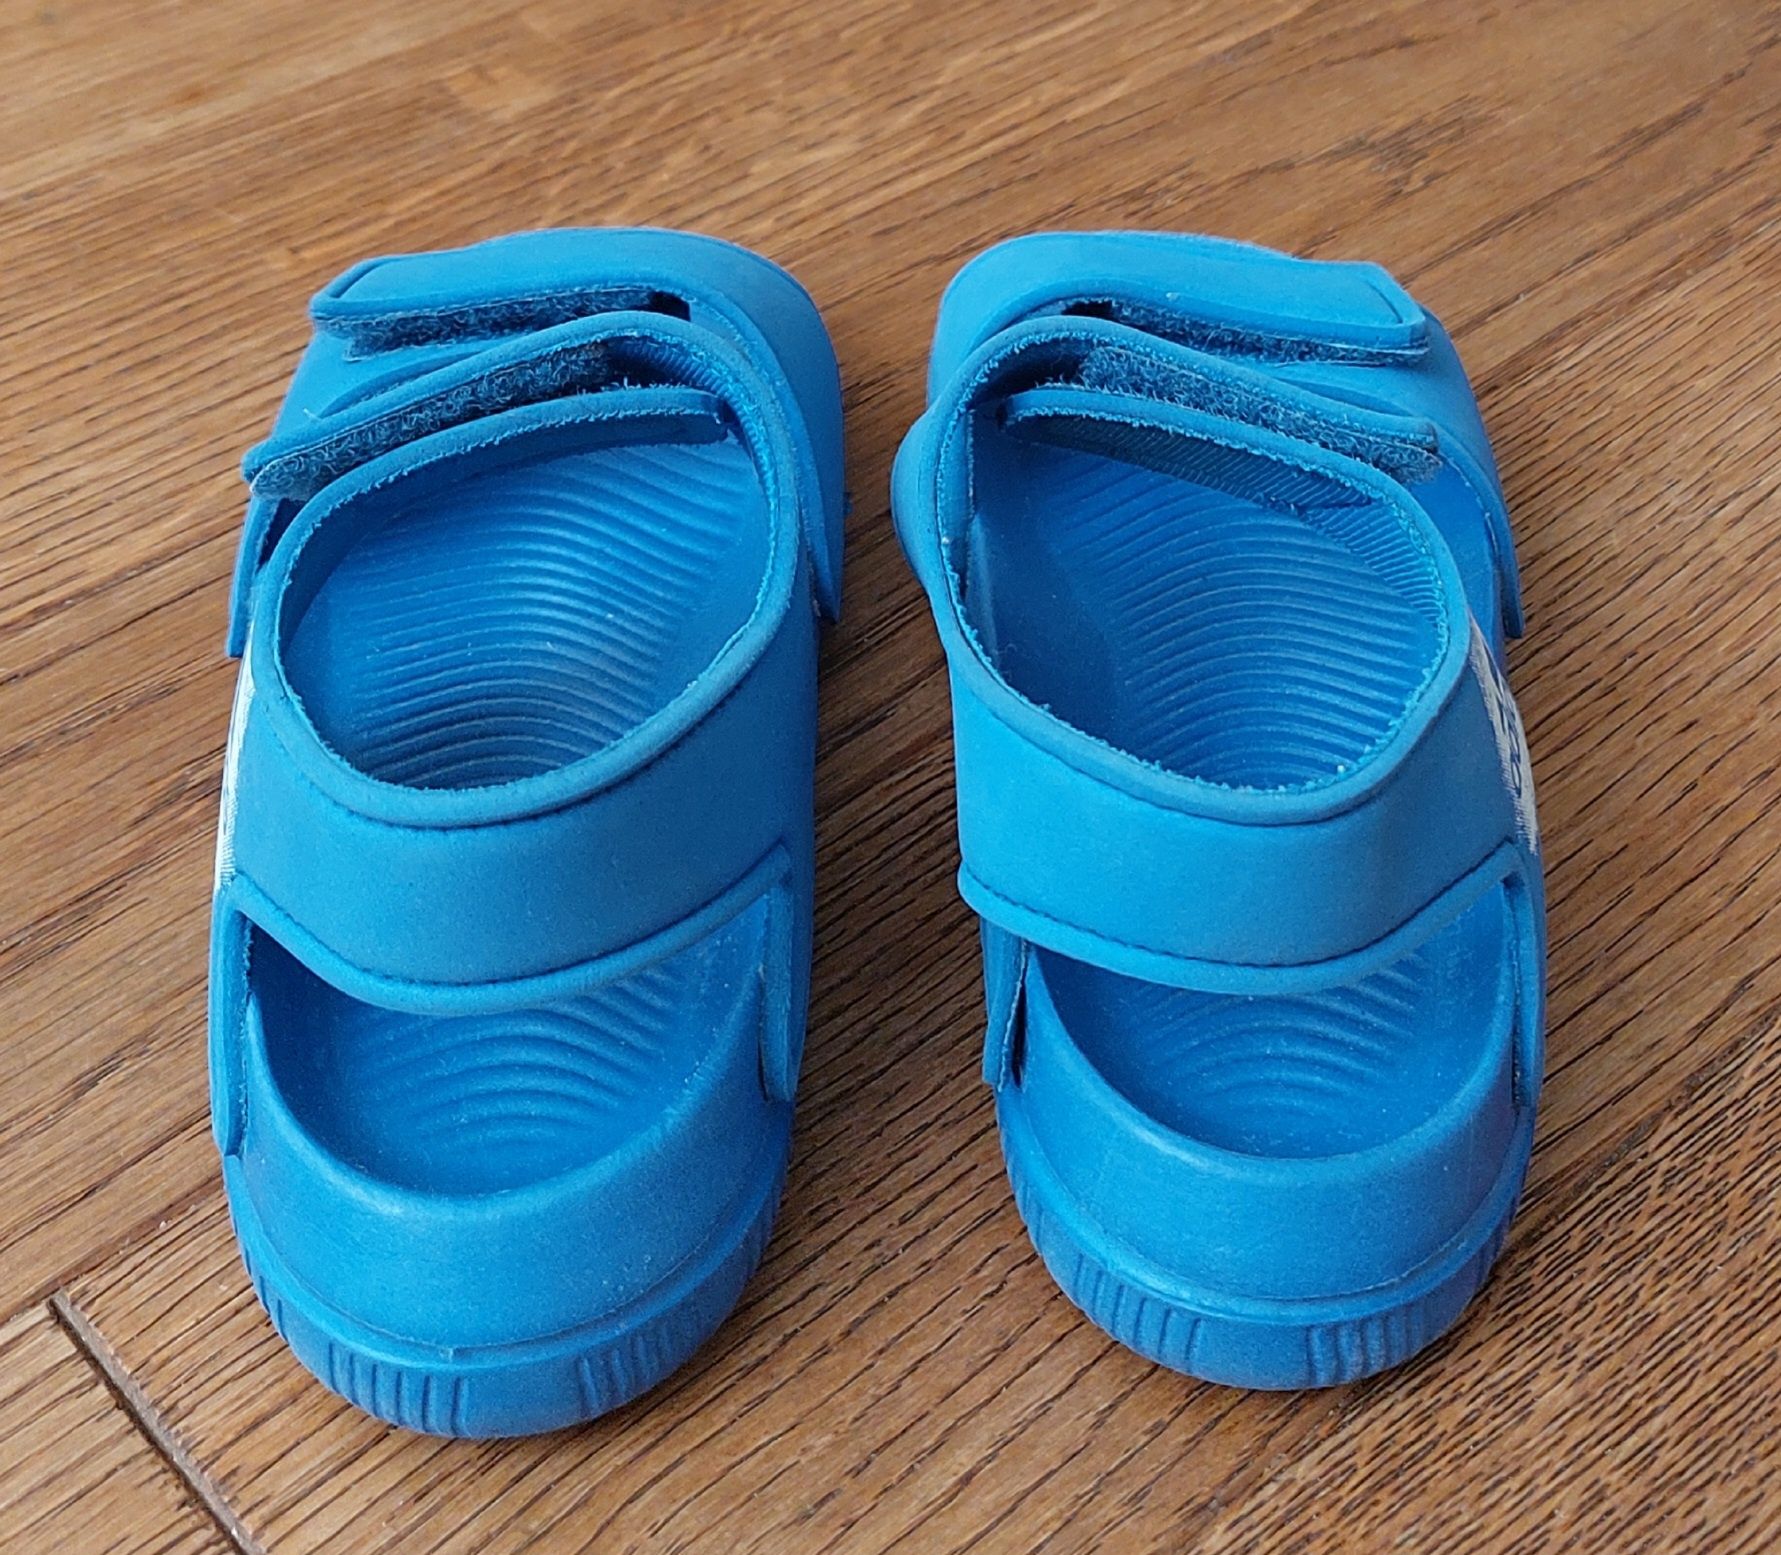 Adidas босоножки аквашузы р.27(17см)